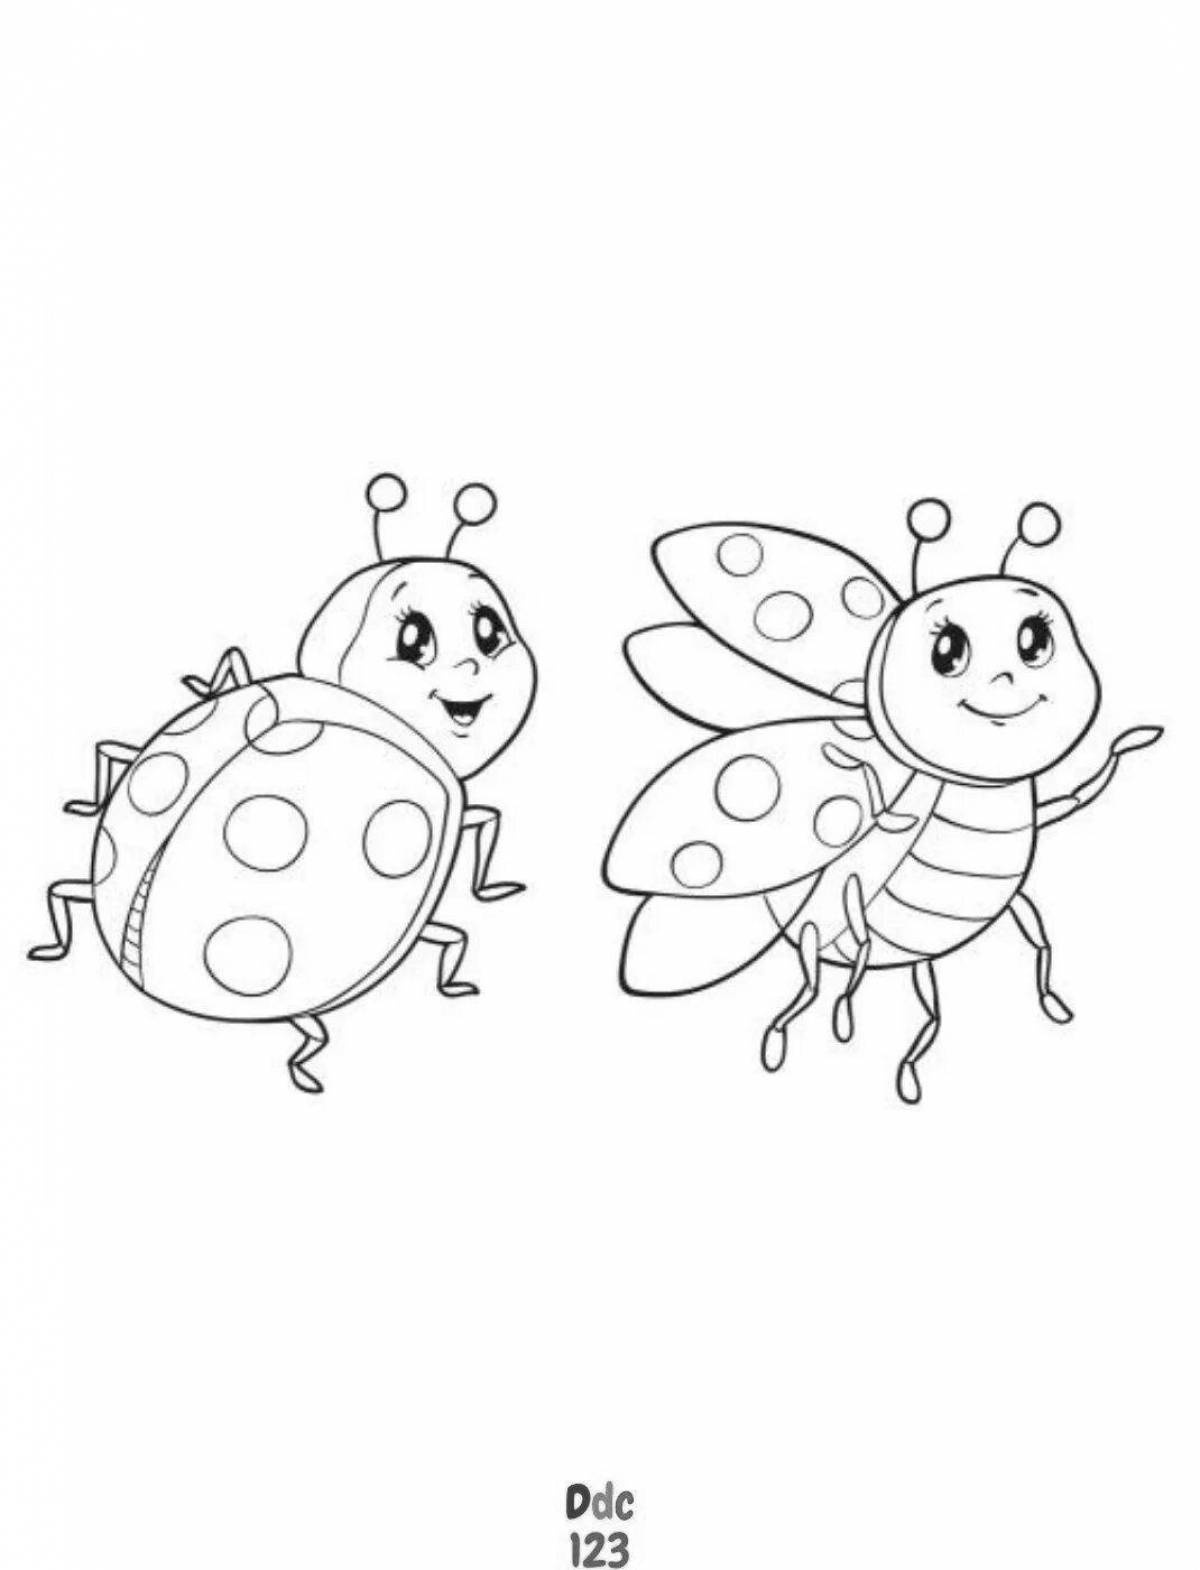 Live ladybug coloring book for kids